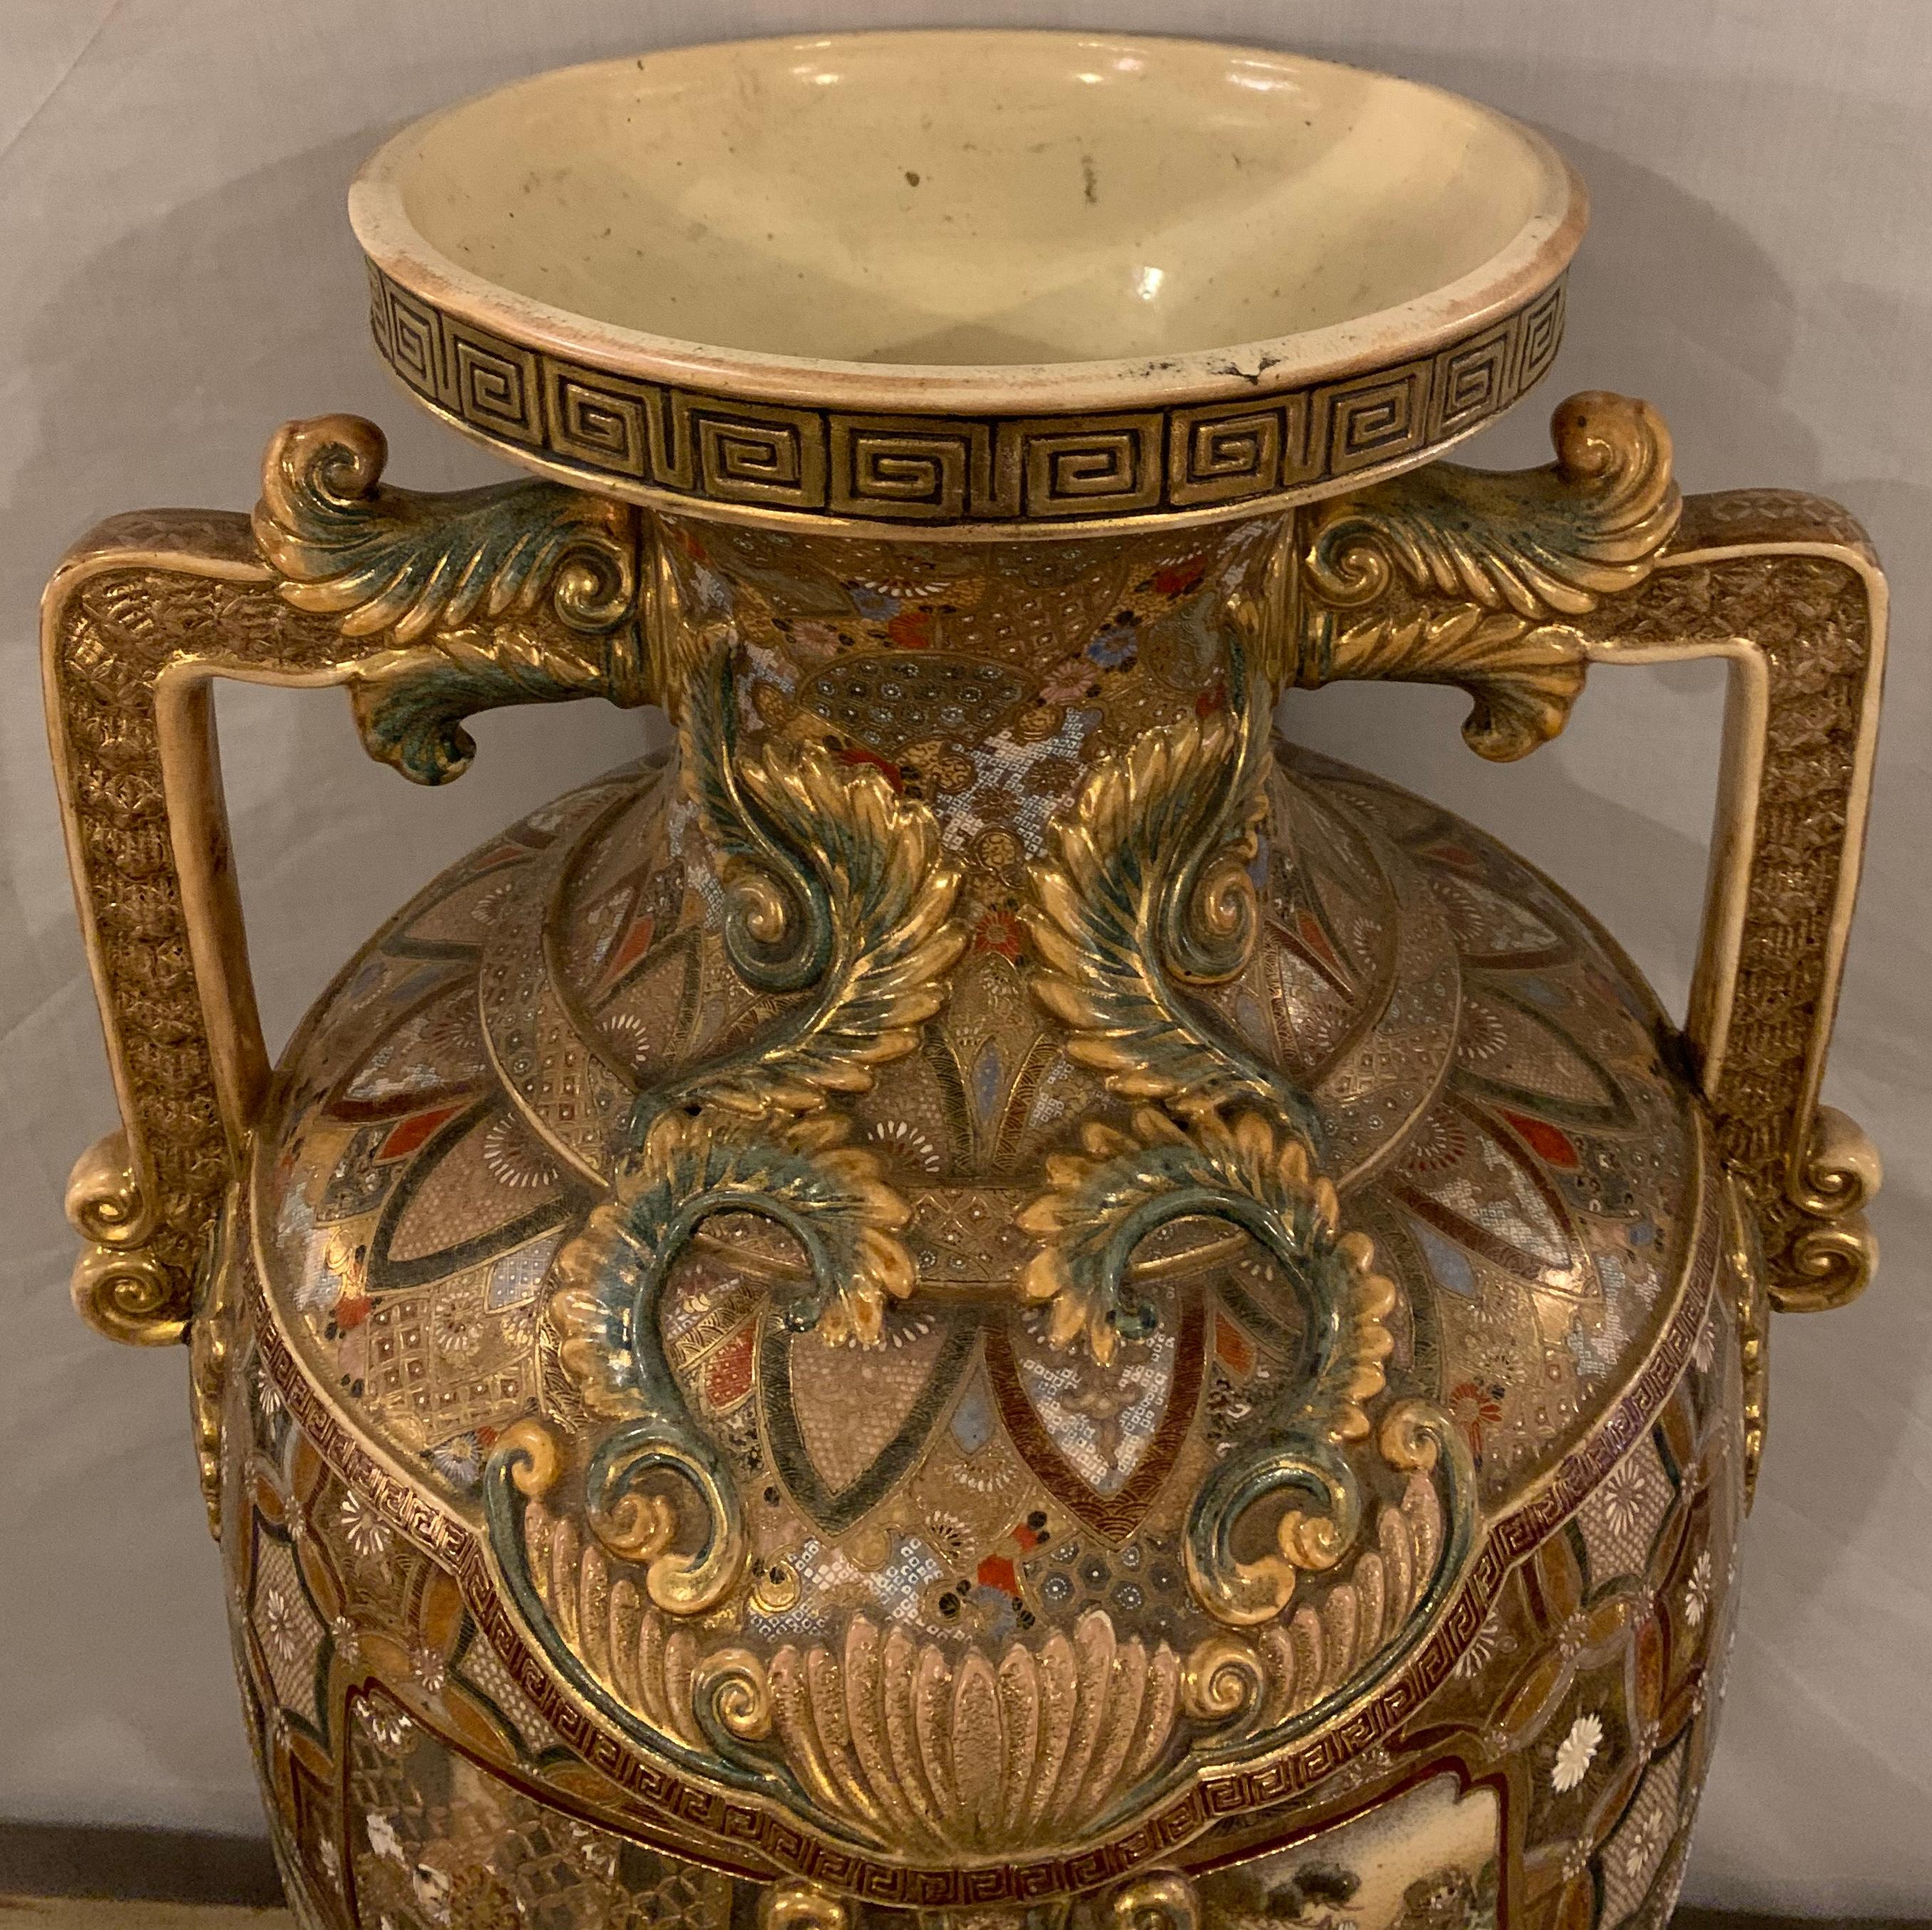 Satsuma thousand face vase or urn palace sized twin handled 35.5 inches high having a gilt Greek key designed rim.

Greg
SXXX/ESAA.